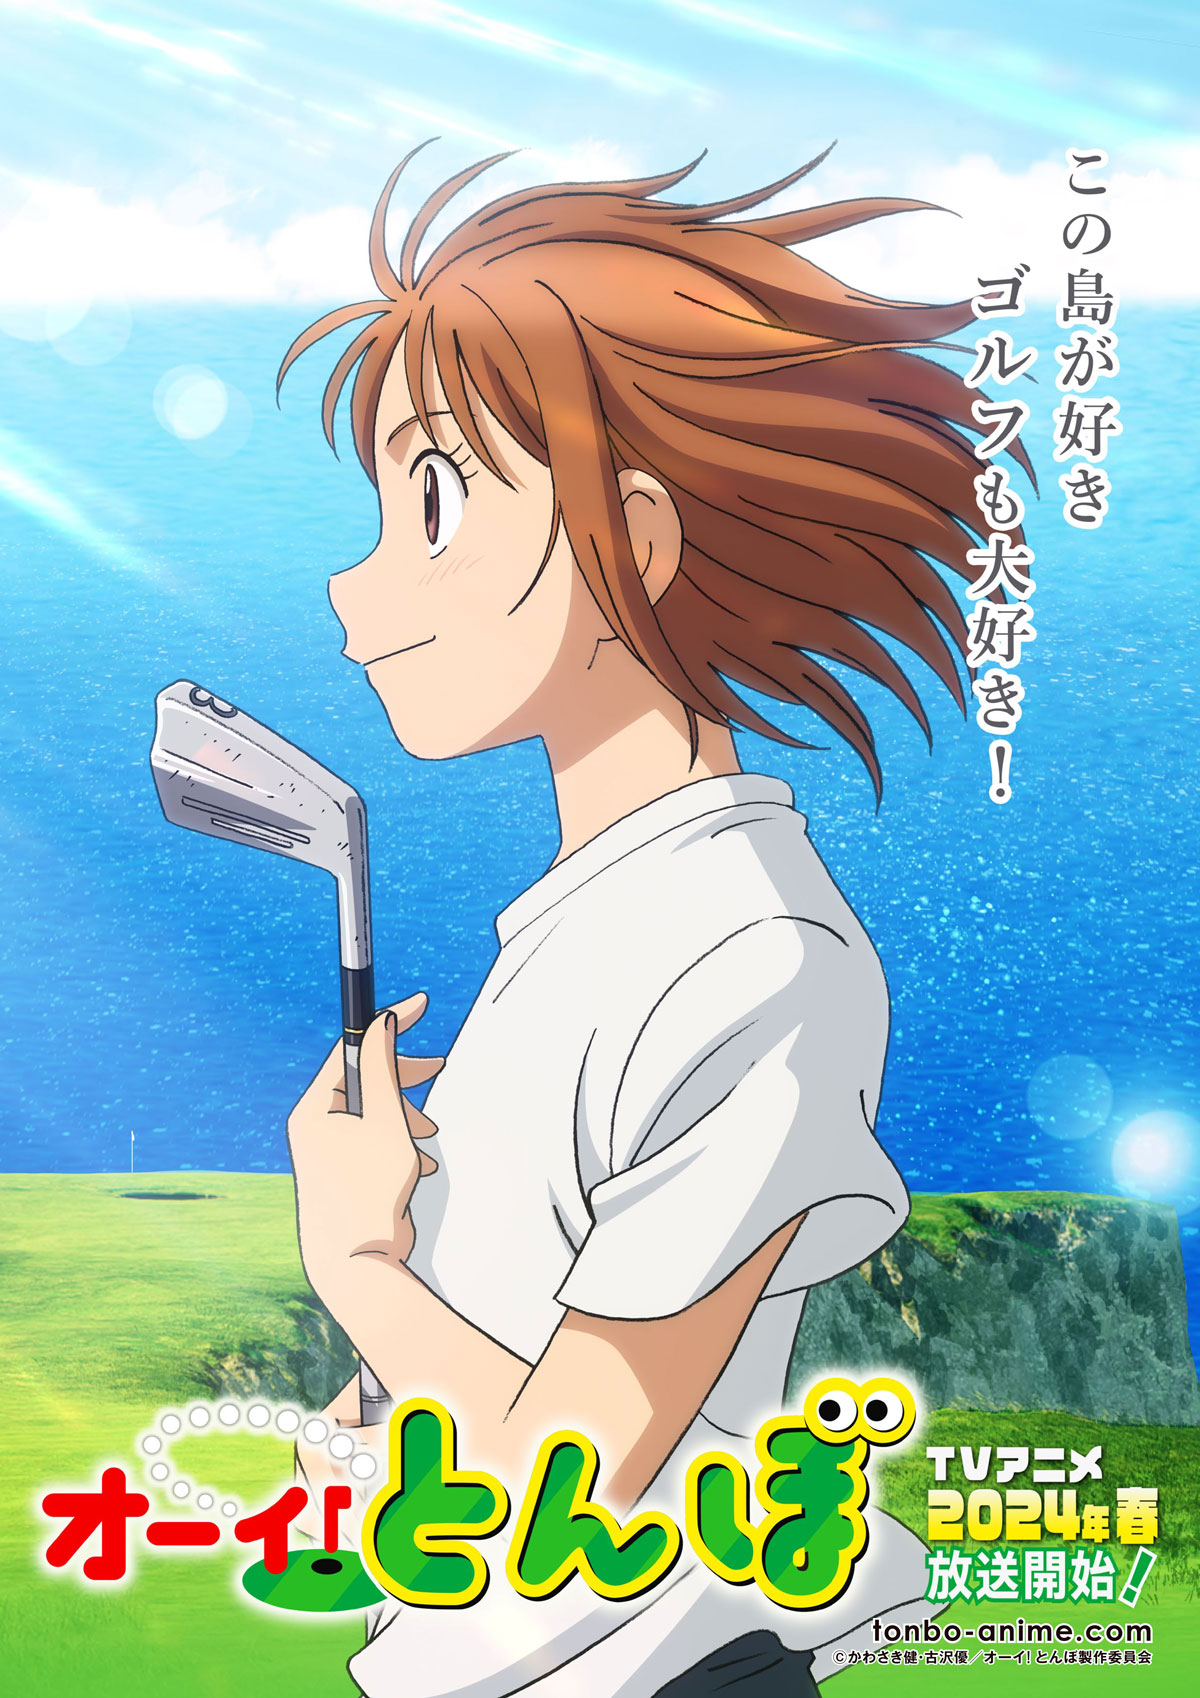 Anime Golf Ooi! Tonbo Ungkapkan Perdana pada 6 April dalam Trailer Terbaru